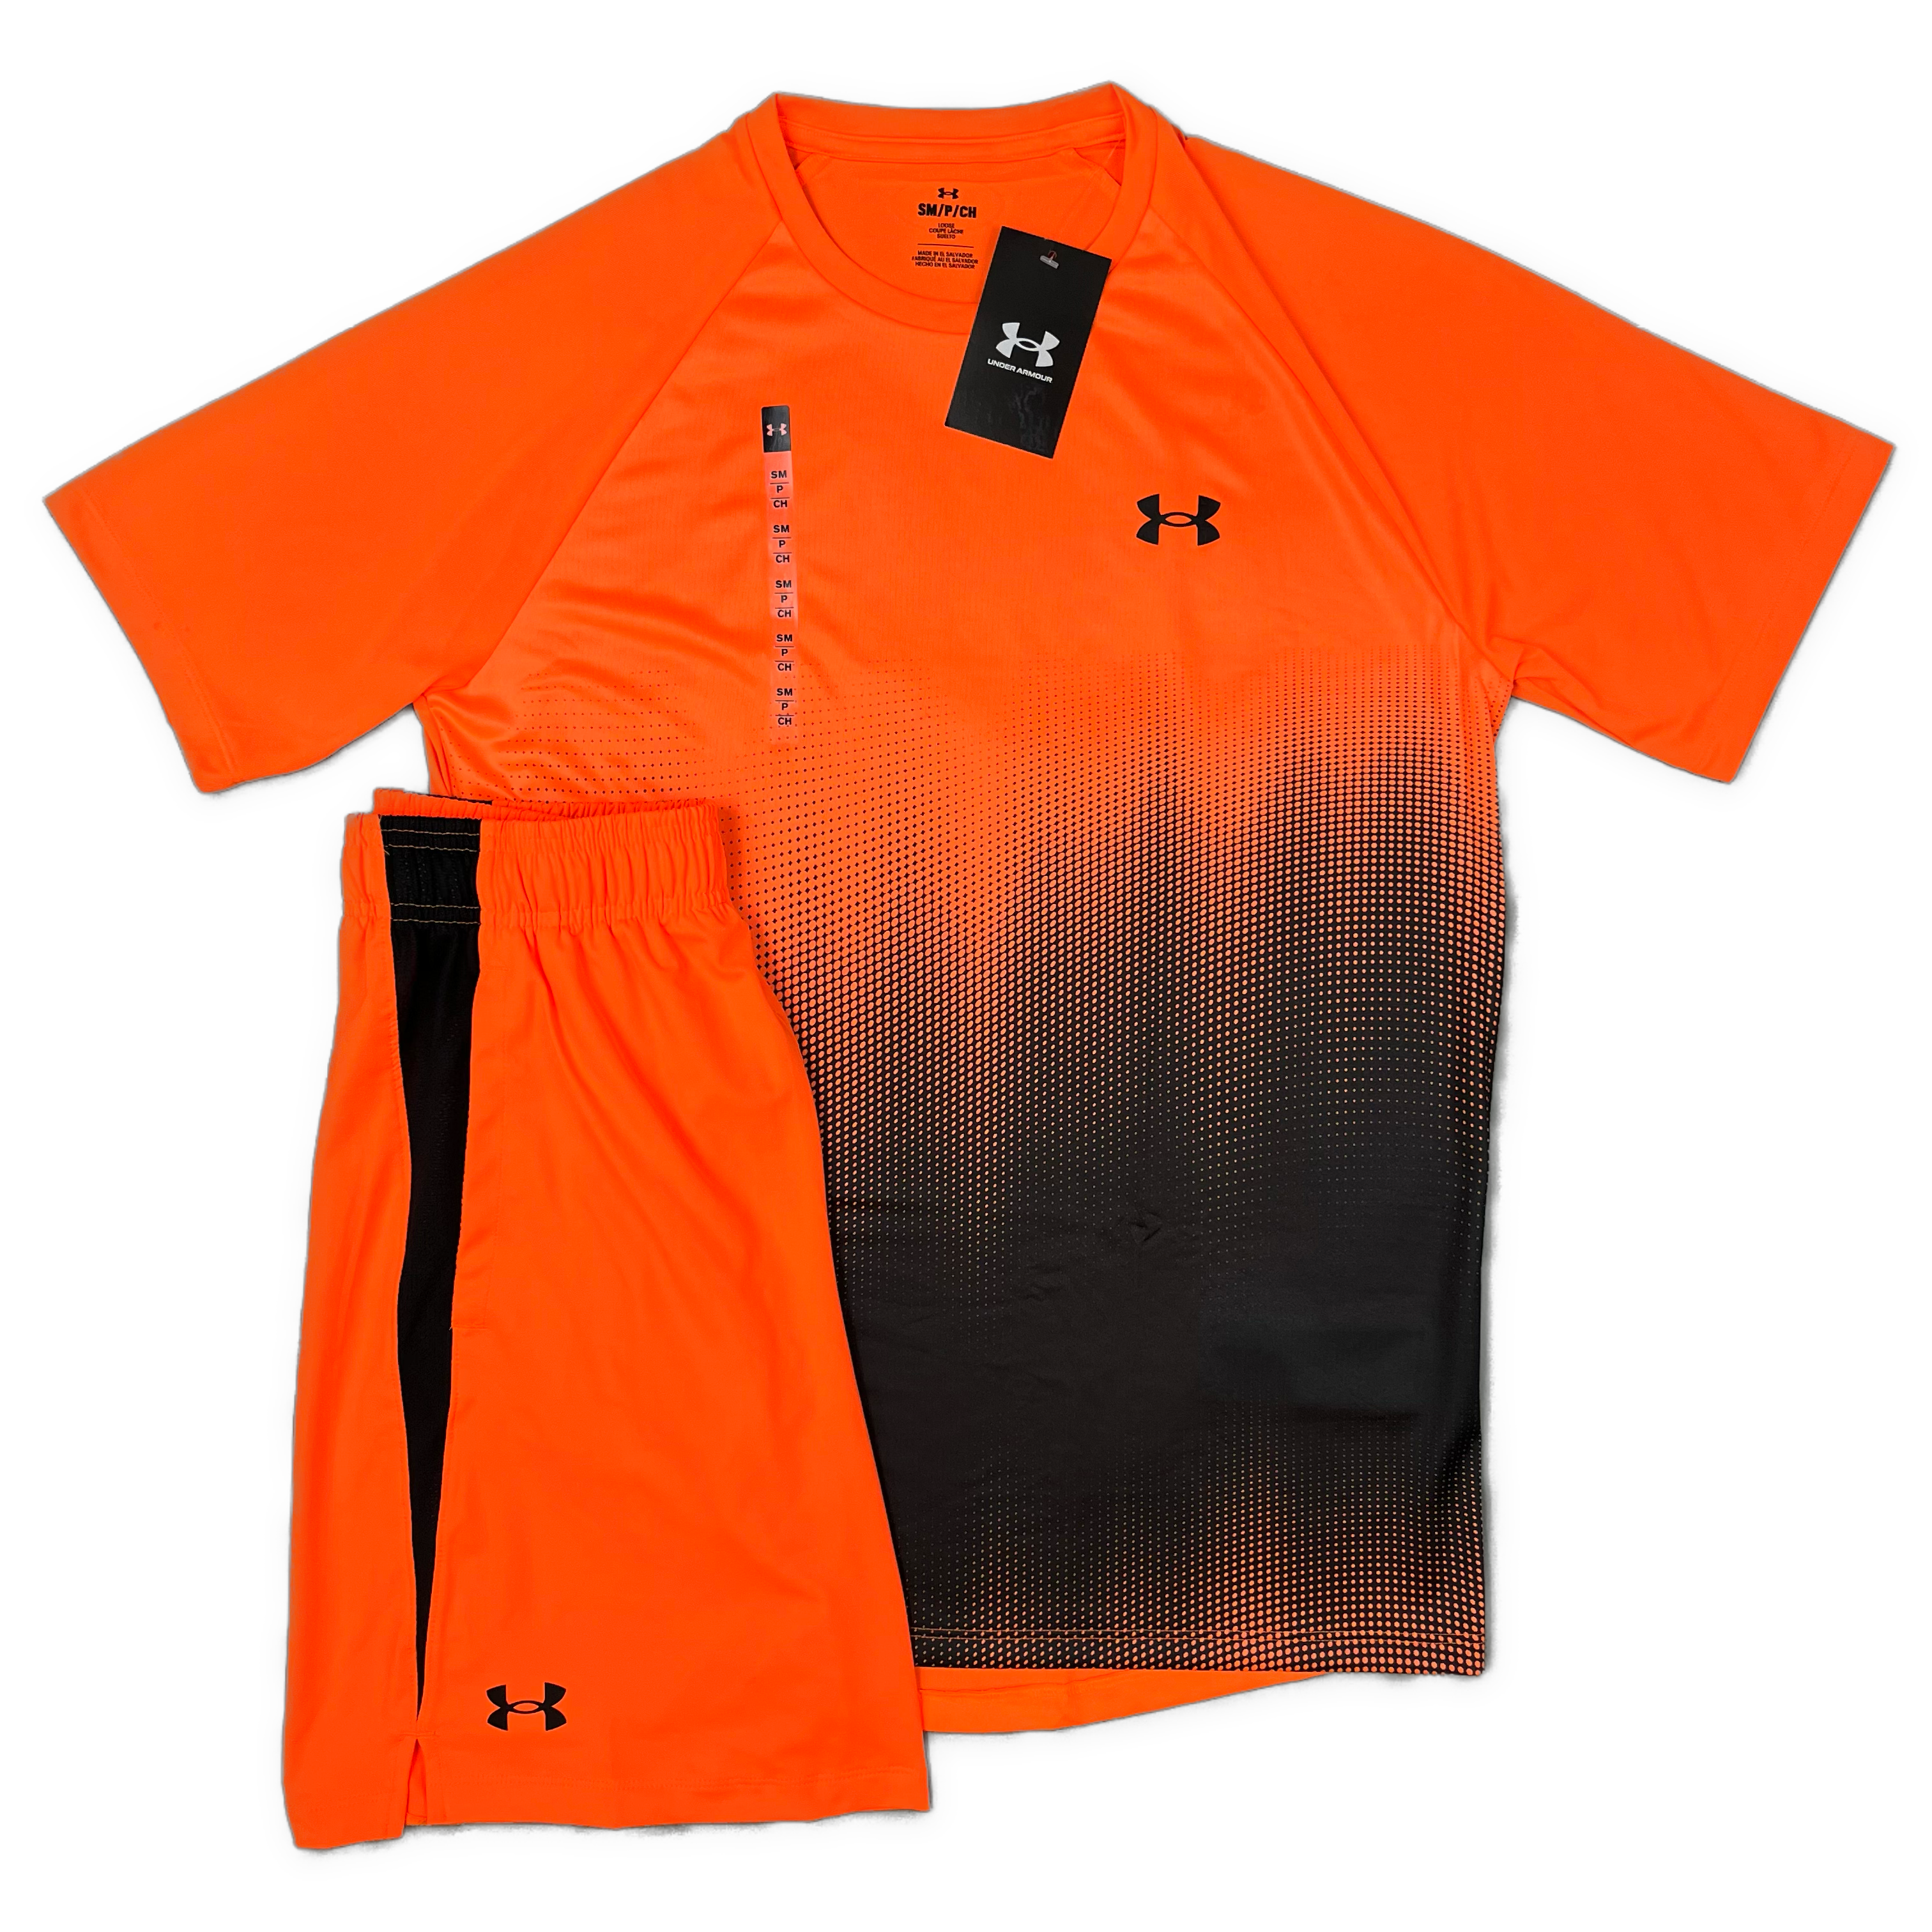 Under Armour - Seamless Surge T-Shirt Men team orange at Sport Bittl Shop